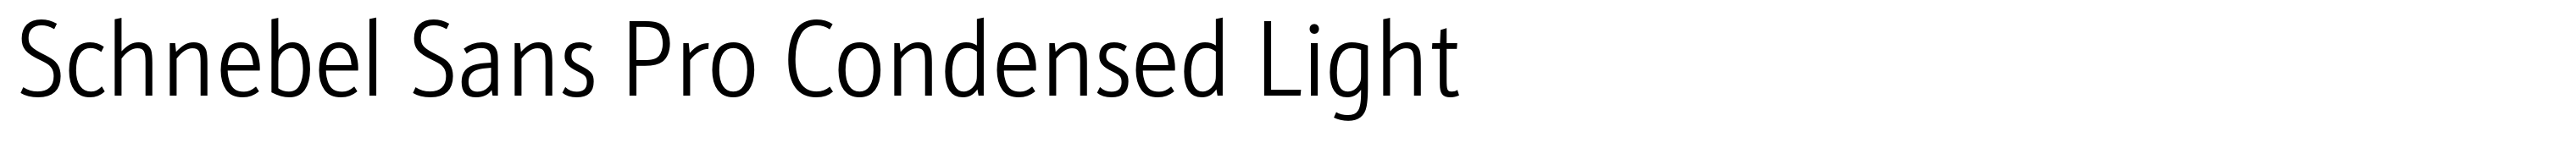 Schnebel Sans Pro Condensed Light